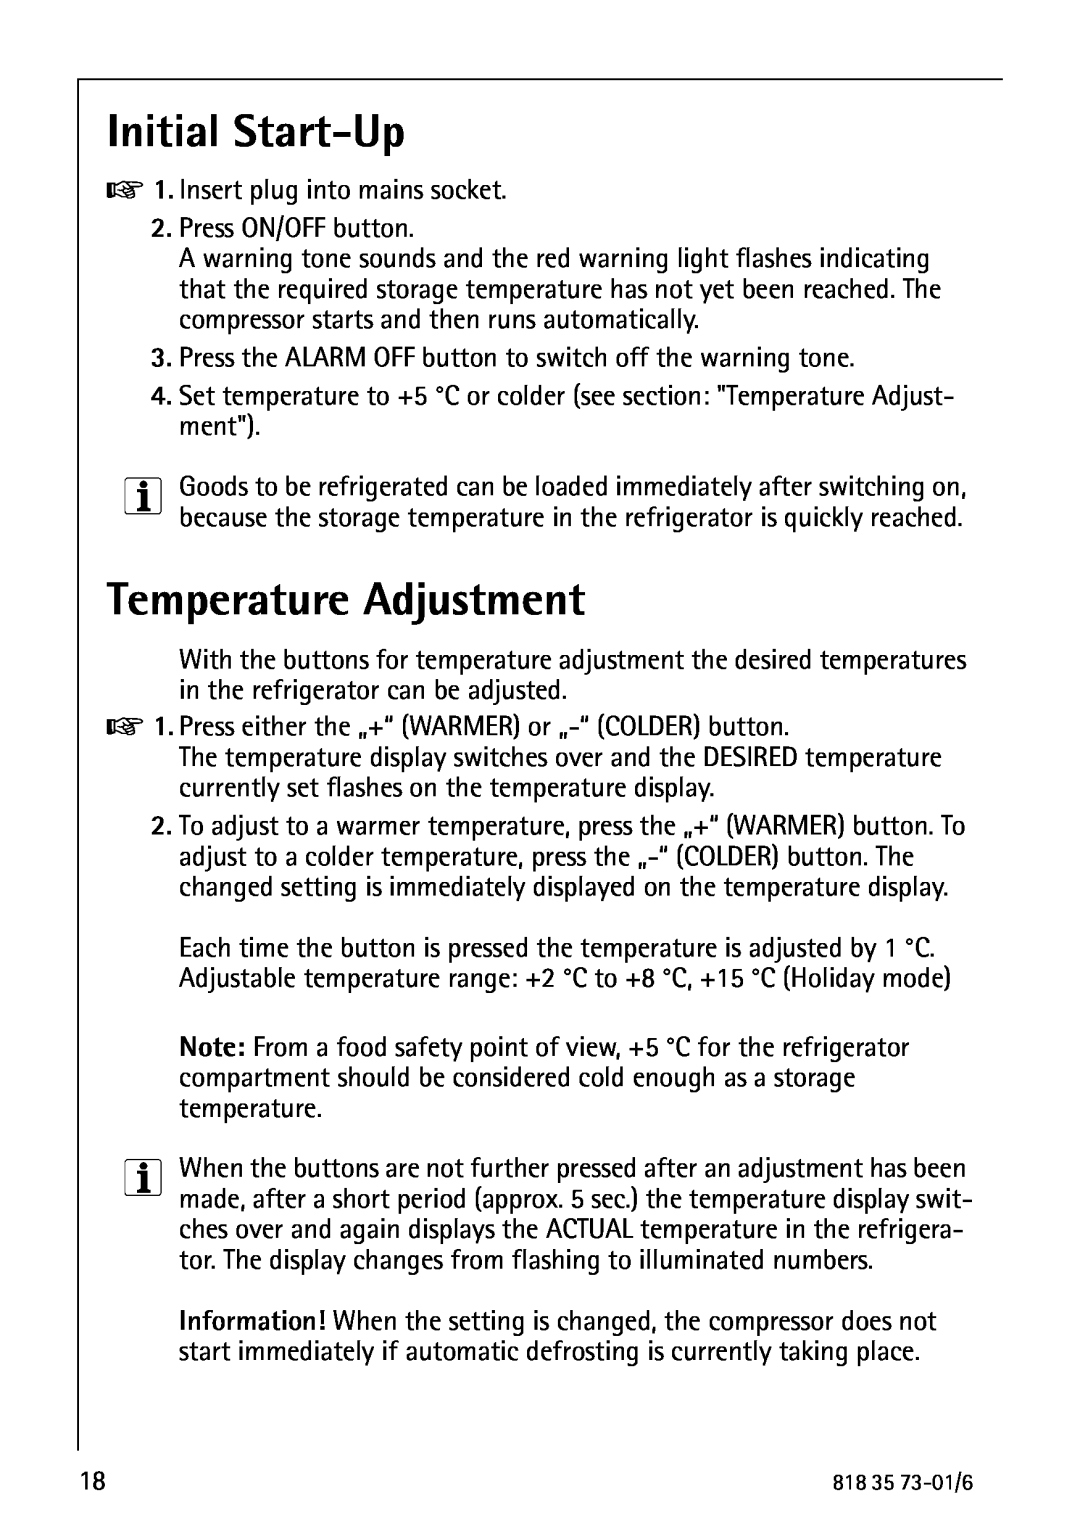 Electrolux SANTO 72340 KA operating instructions Initial Start-Up, Temperature Adjustment 